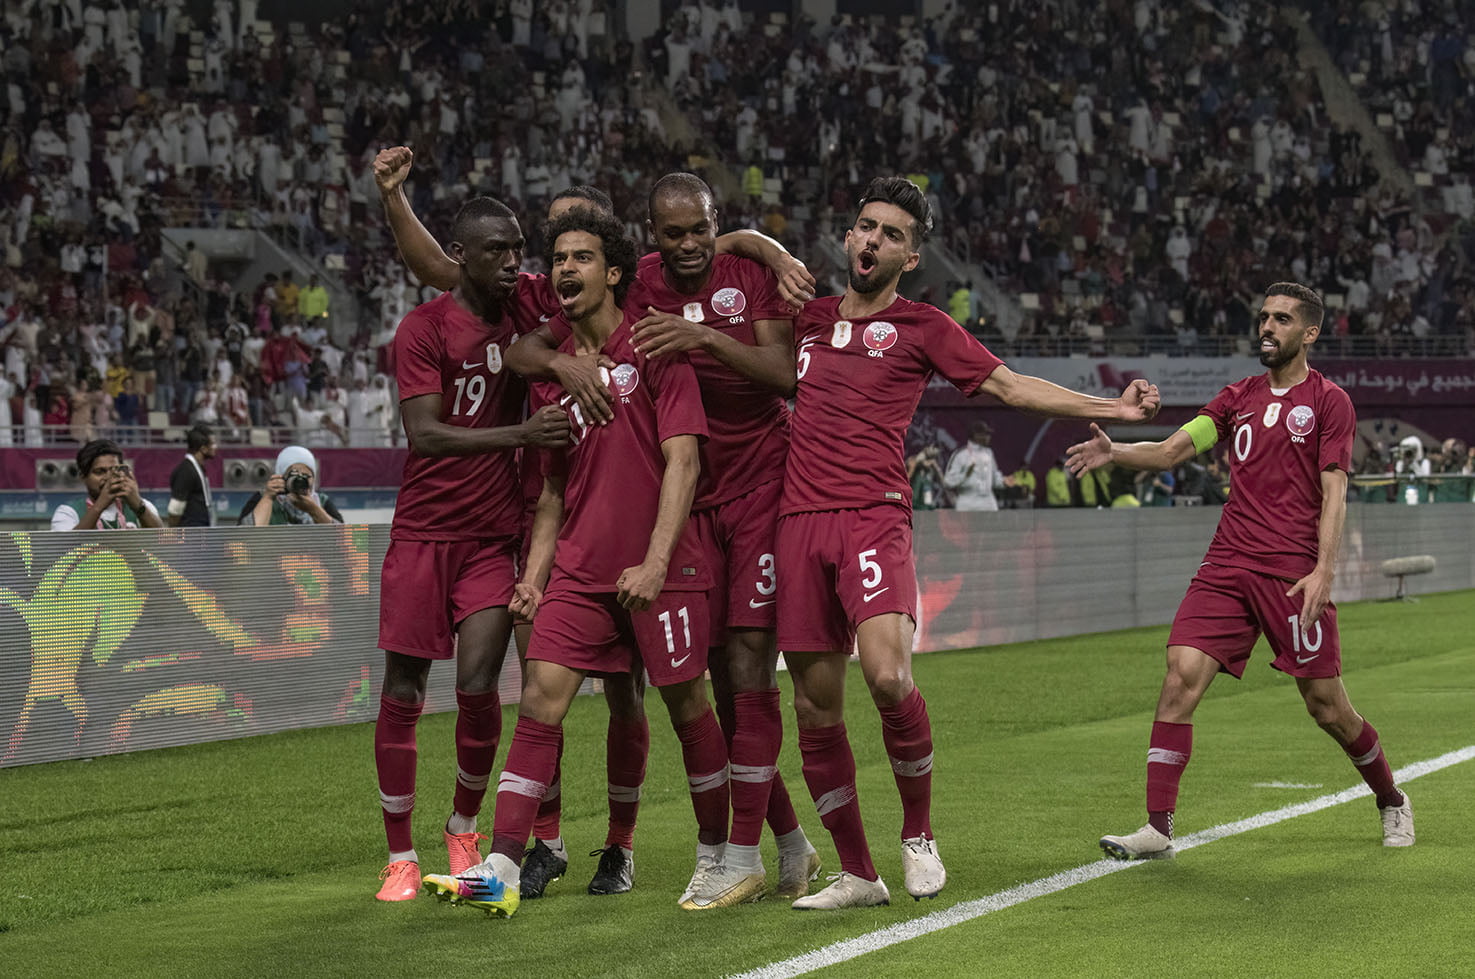 Qatar Football Team Celebrates Goal (Akram Afif, Tareq Salman, Abdulkarim Hassan, Hassan Al Hayods, Almoez ali)